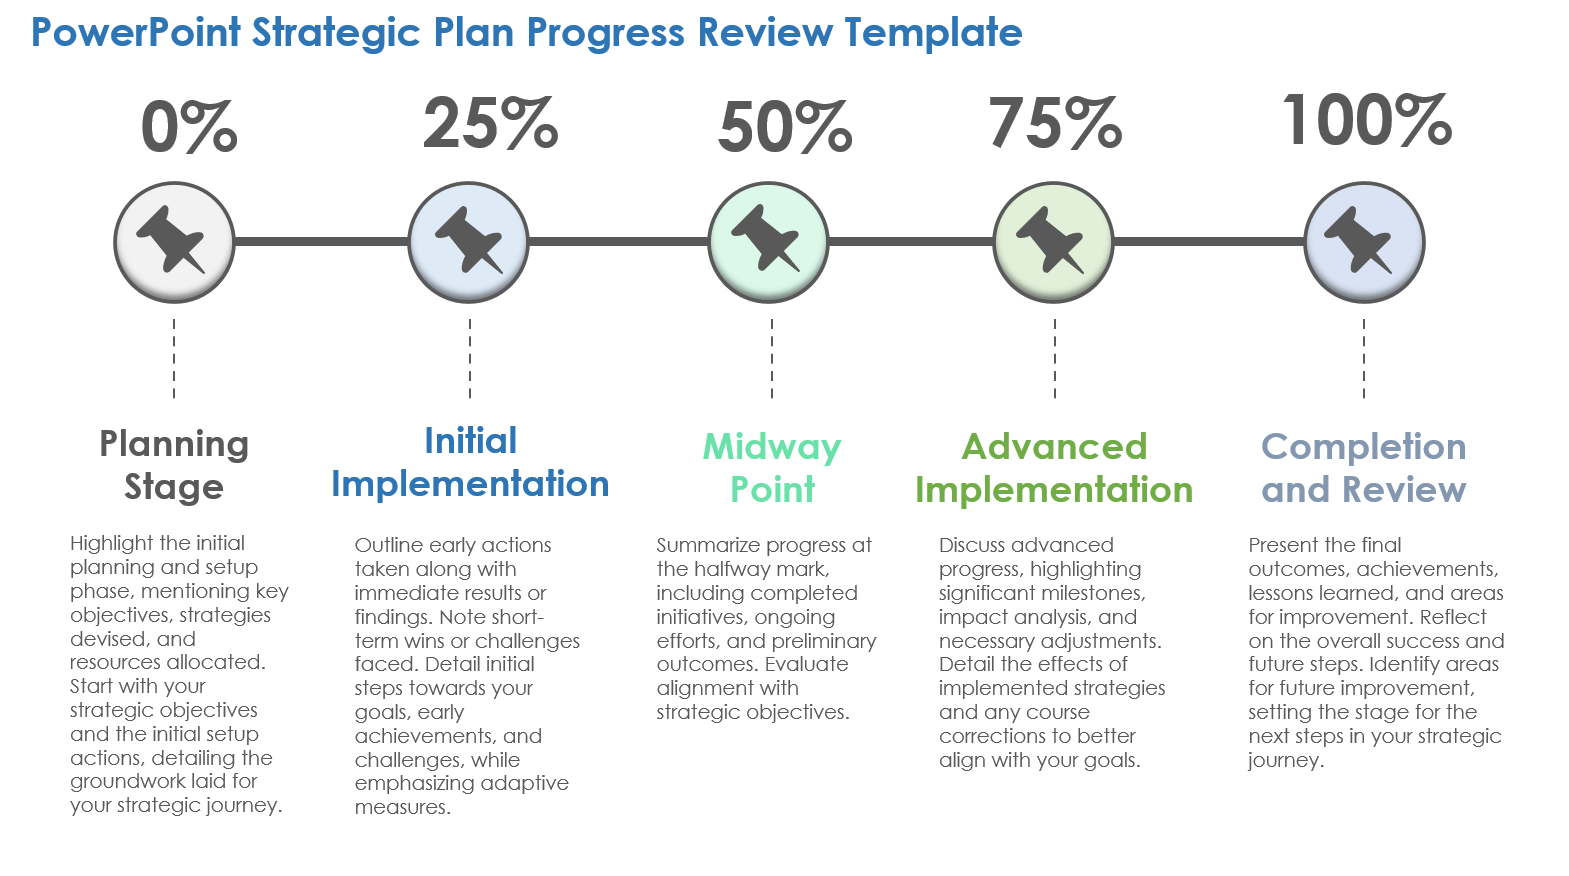 PowerPoint Strategic Plan Progress Review Template